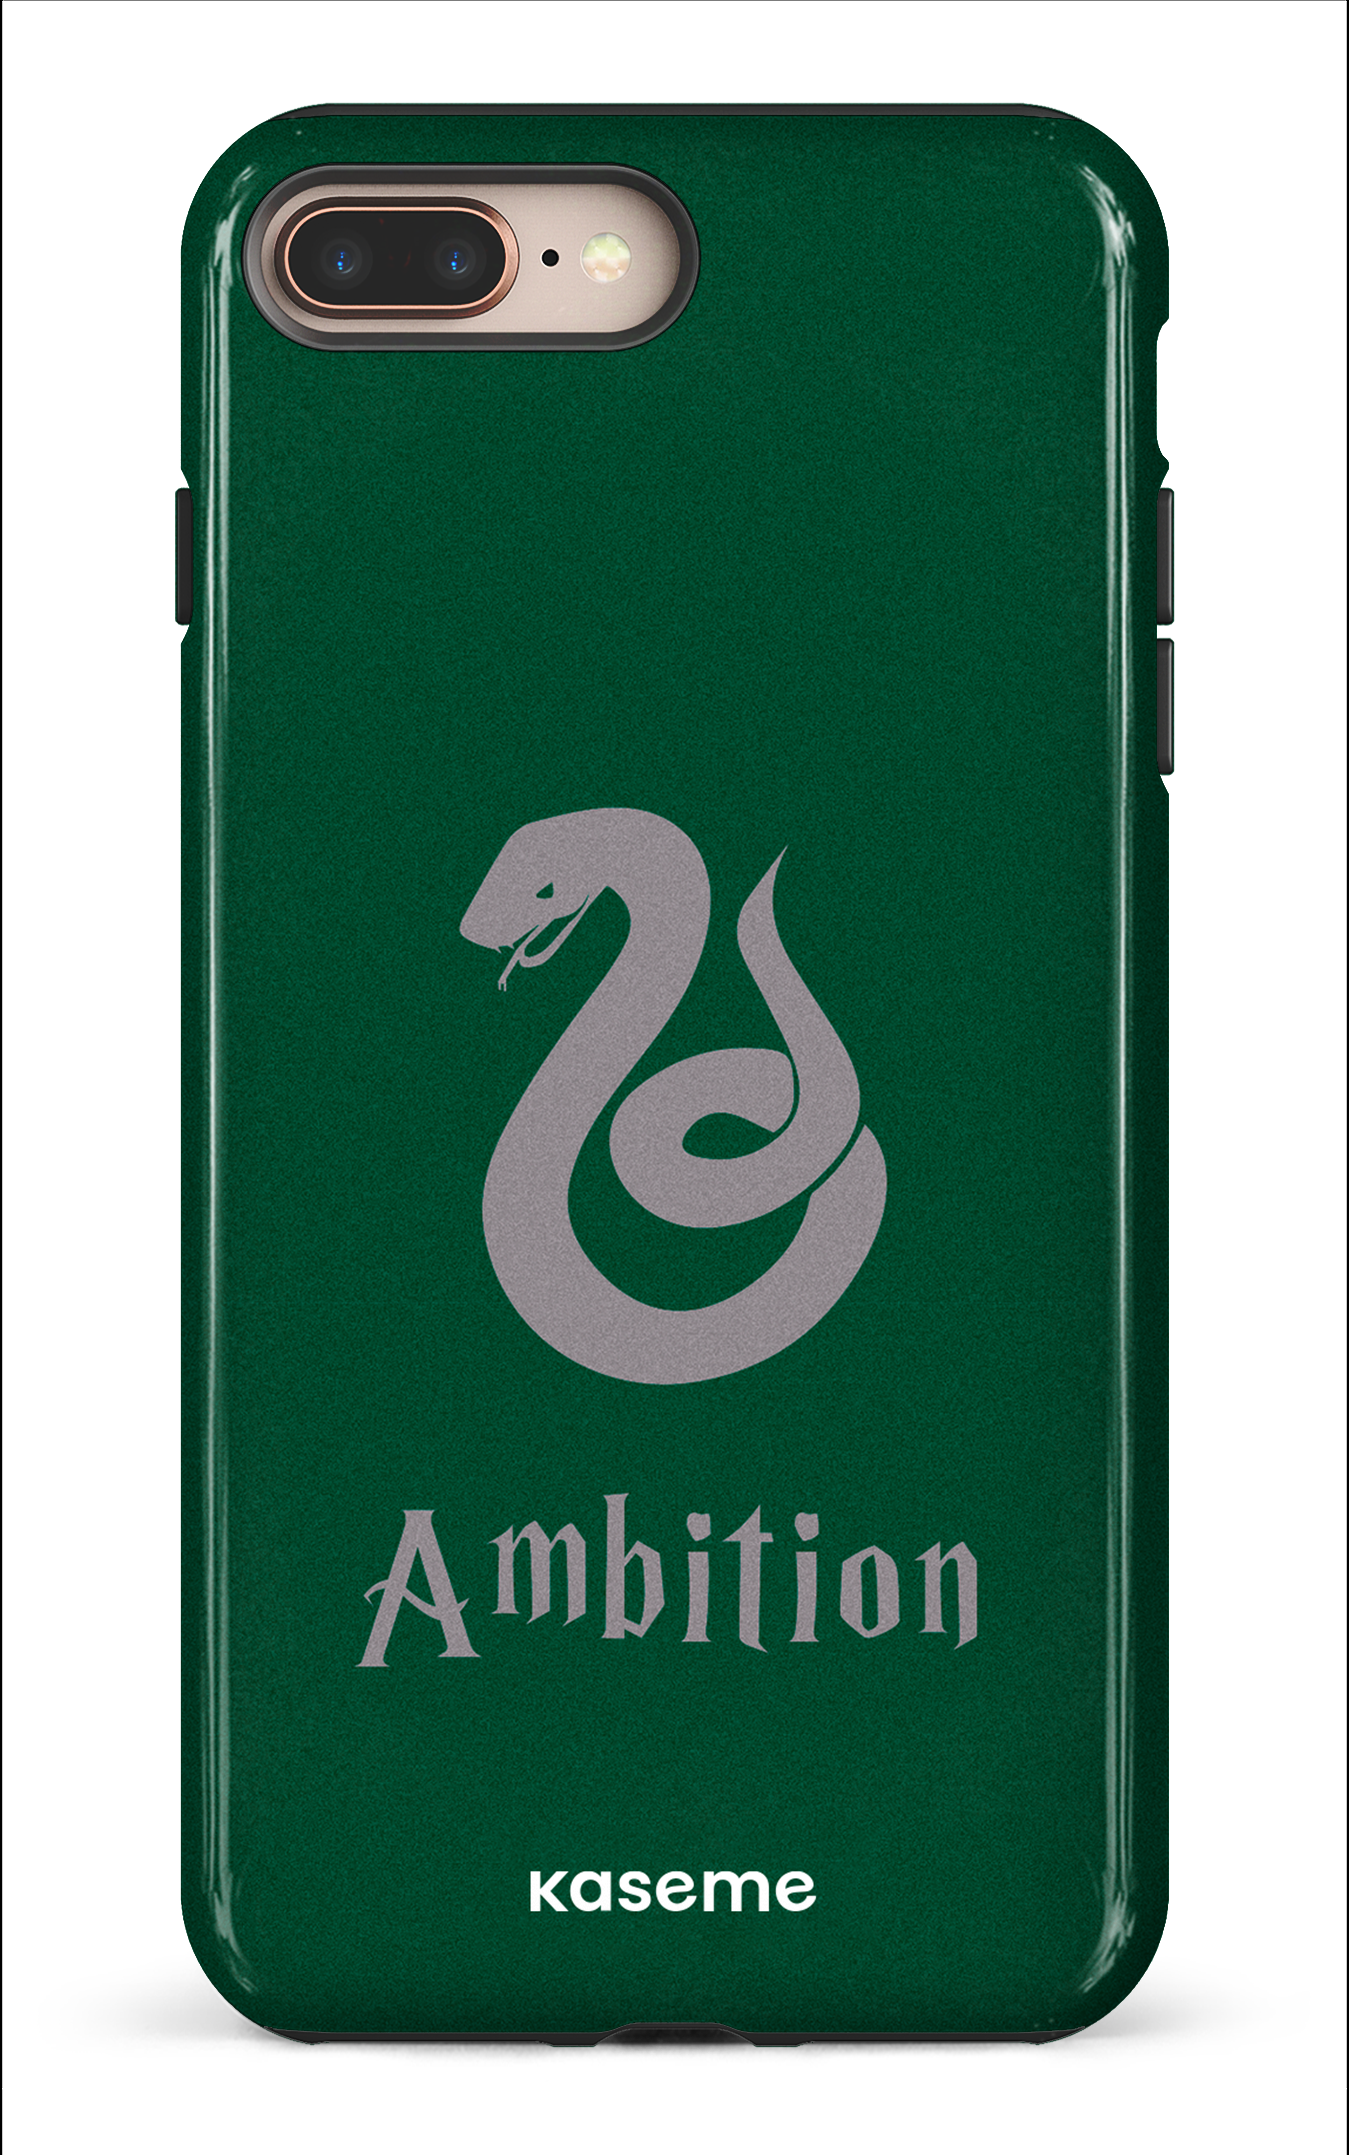 Ambition - iPhone 8 Plus